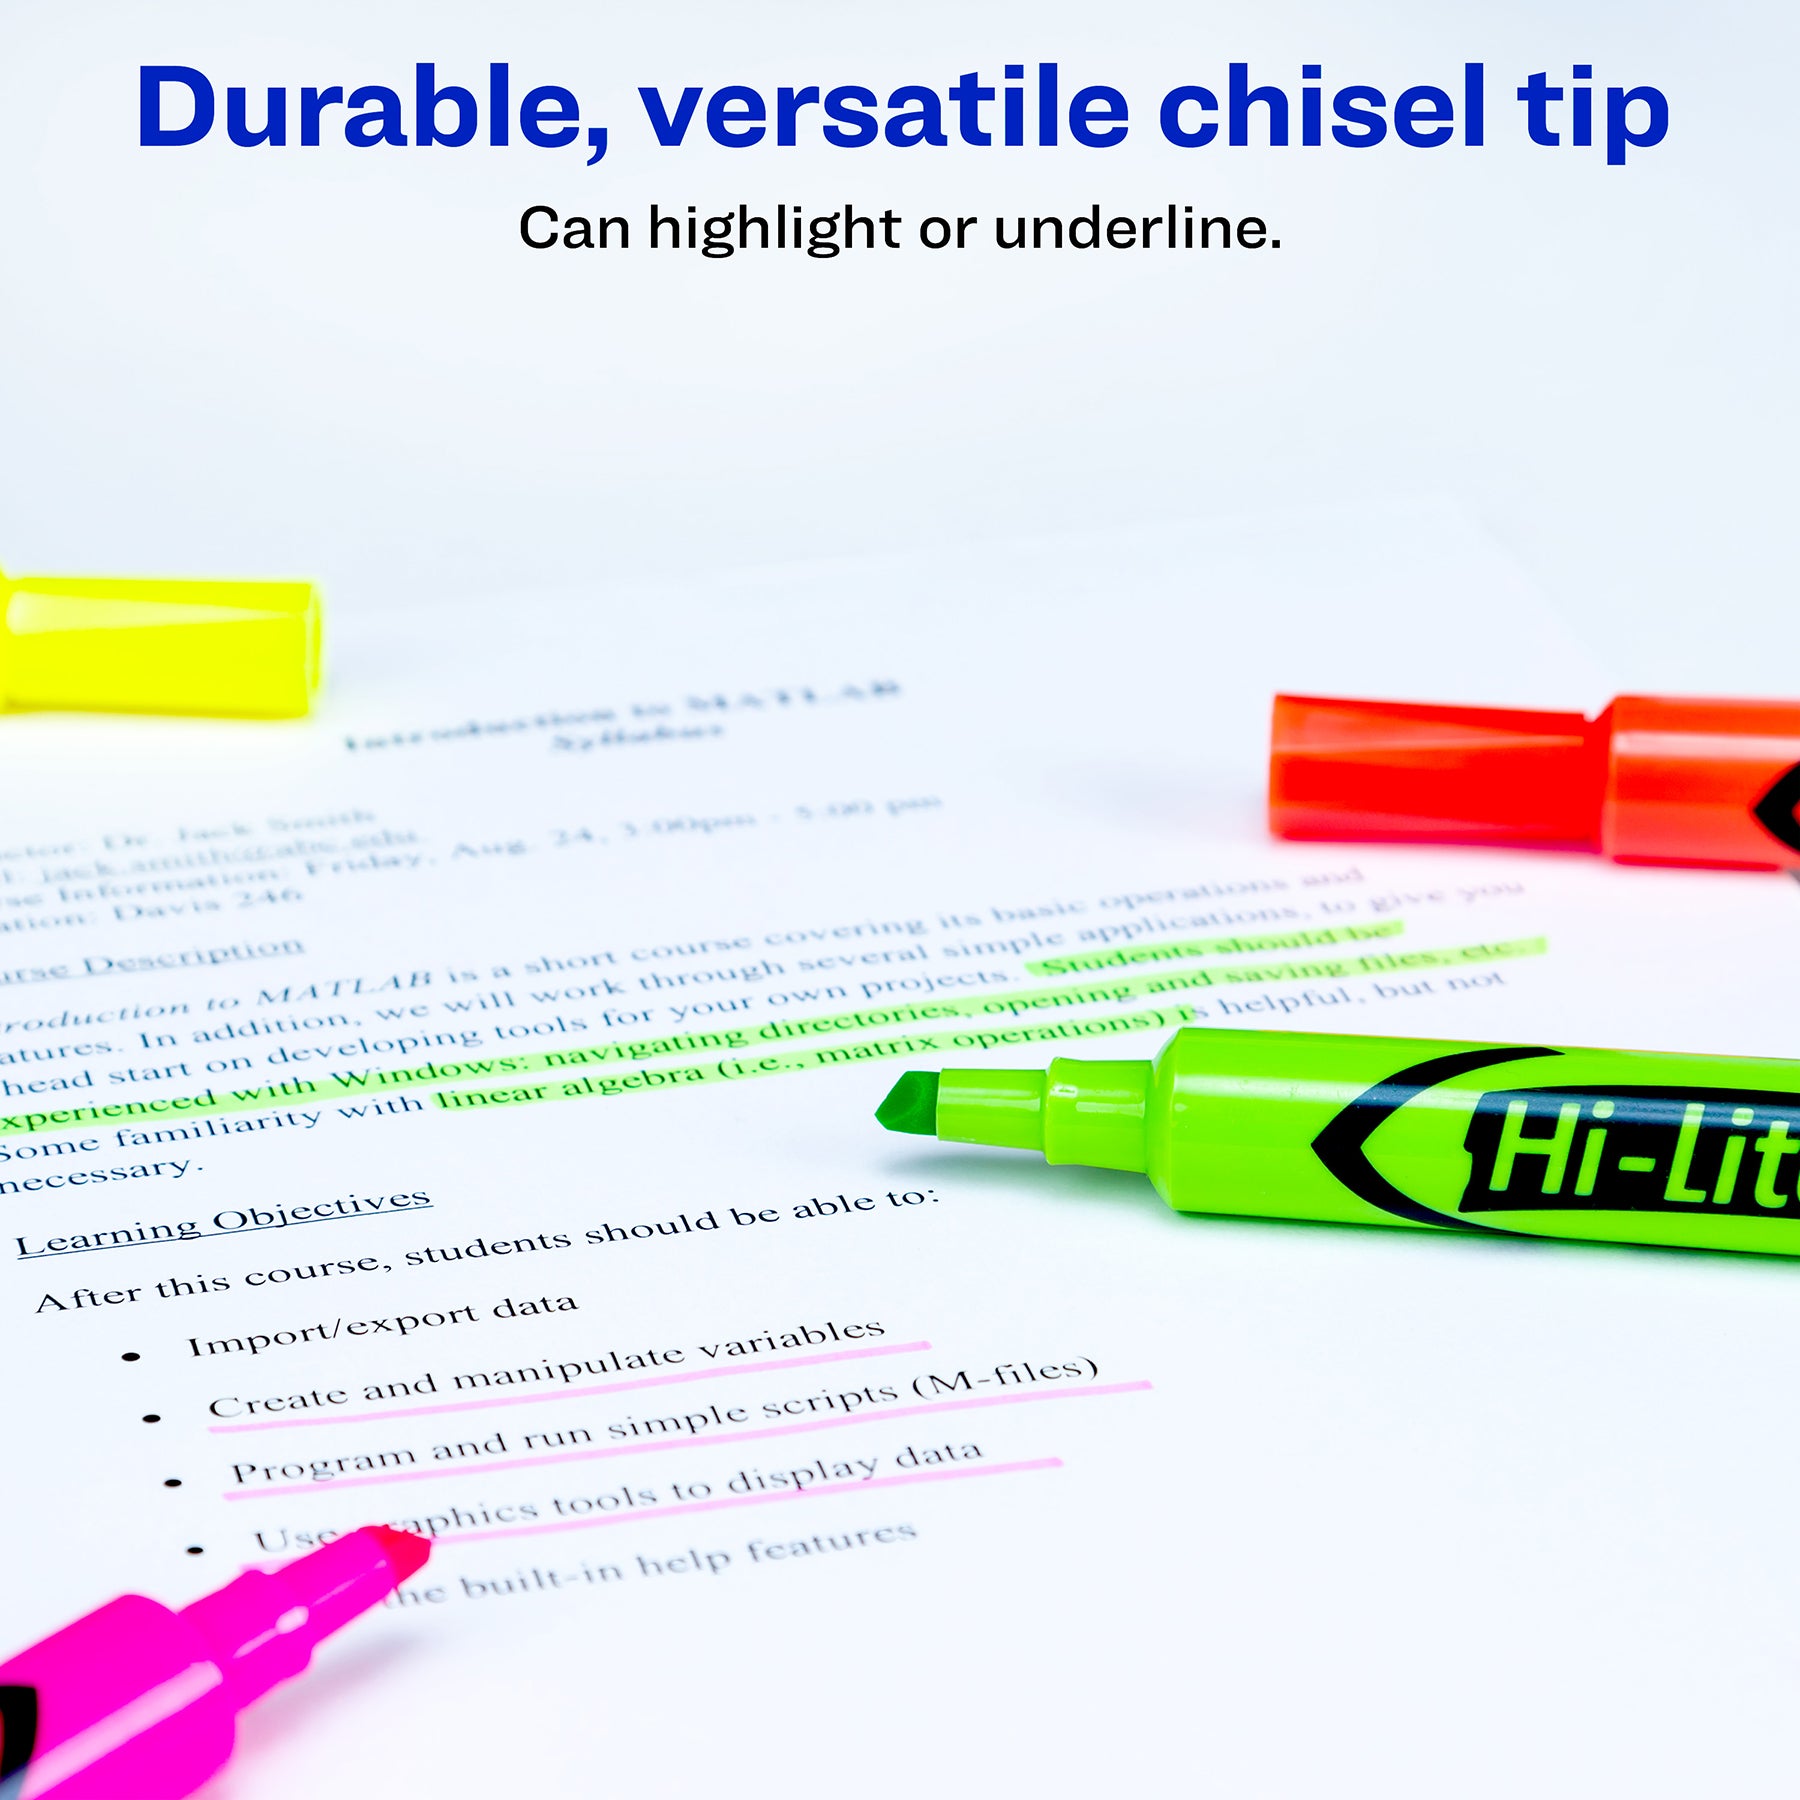 Hi-Liter® Desk-Style Highlighters, Assorted Colors, Smear Safe™, Nontoxic, 4 Per Pack, 4 Packs